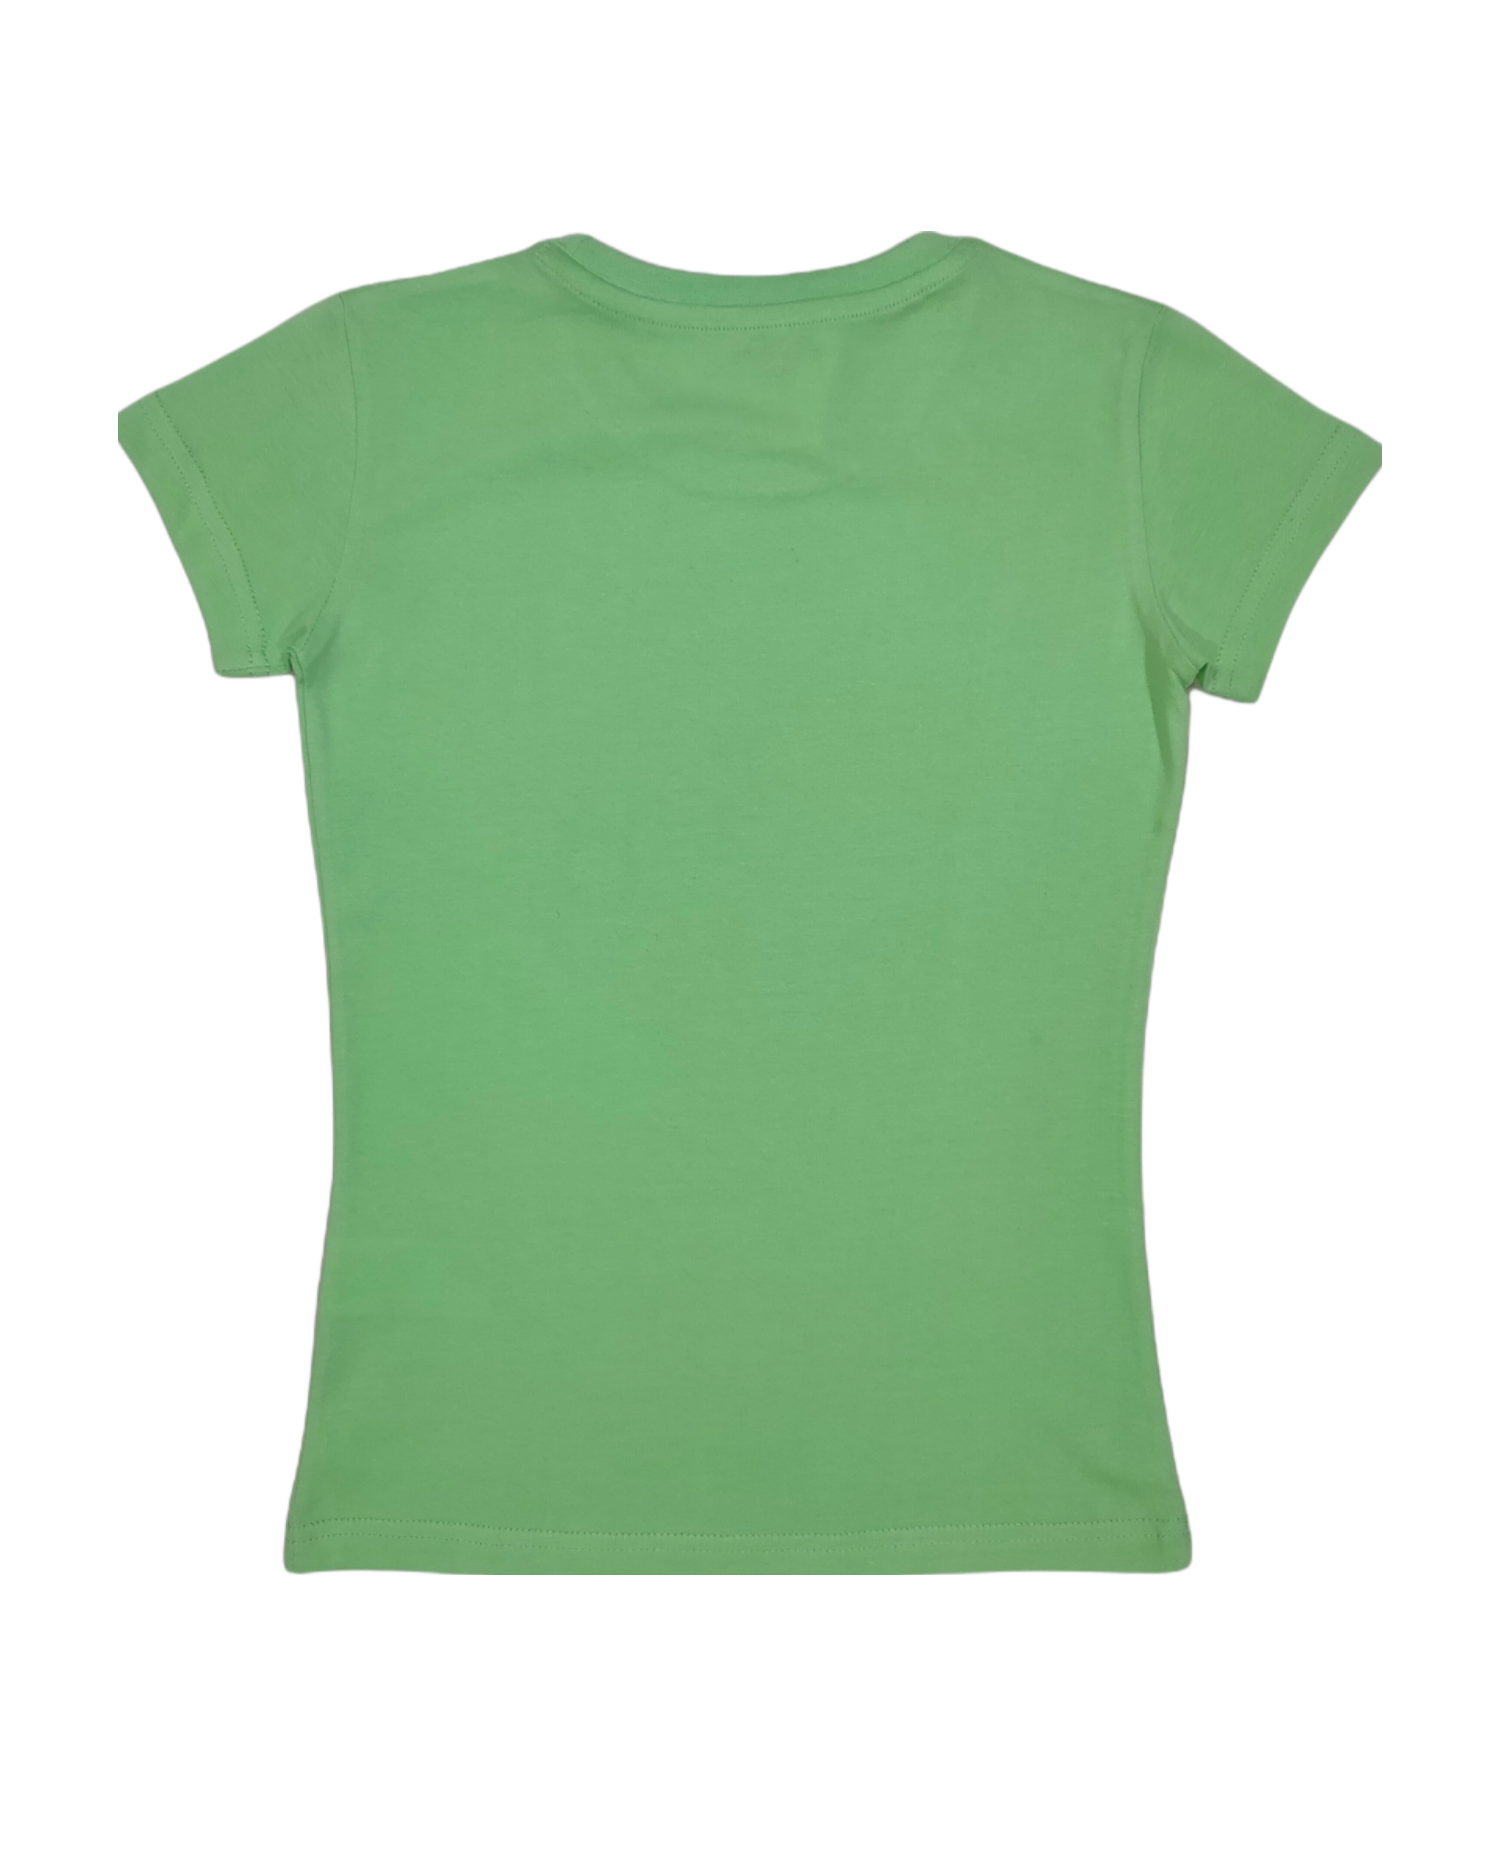 Girls Green Printed Cotton Knits Top